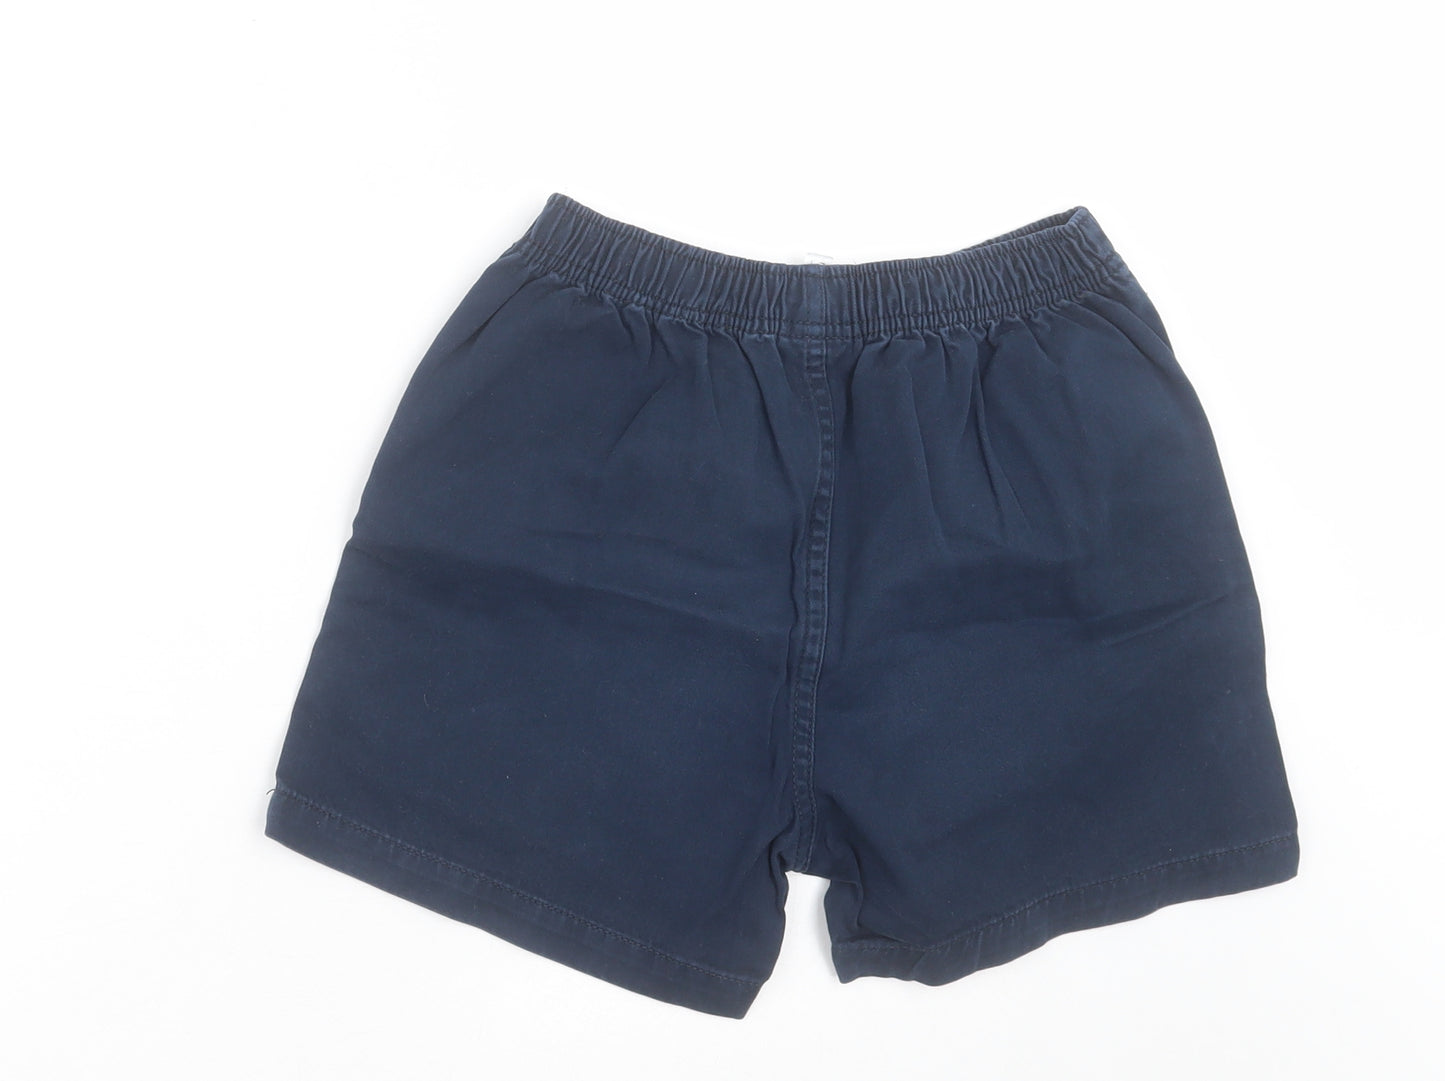 NEXT Boys Blue  Cotton Bermuda Shorts Size 10 Years  Regular